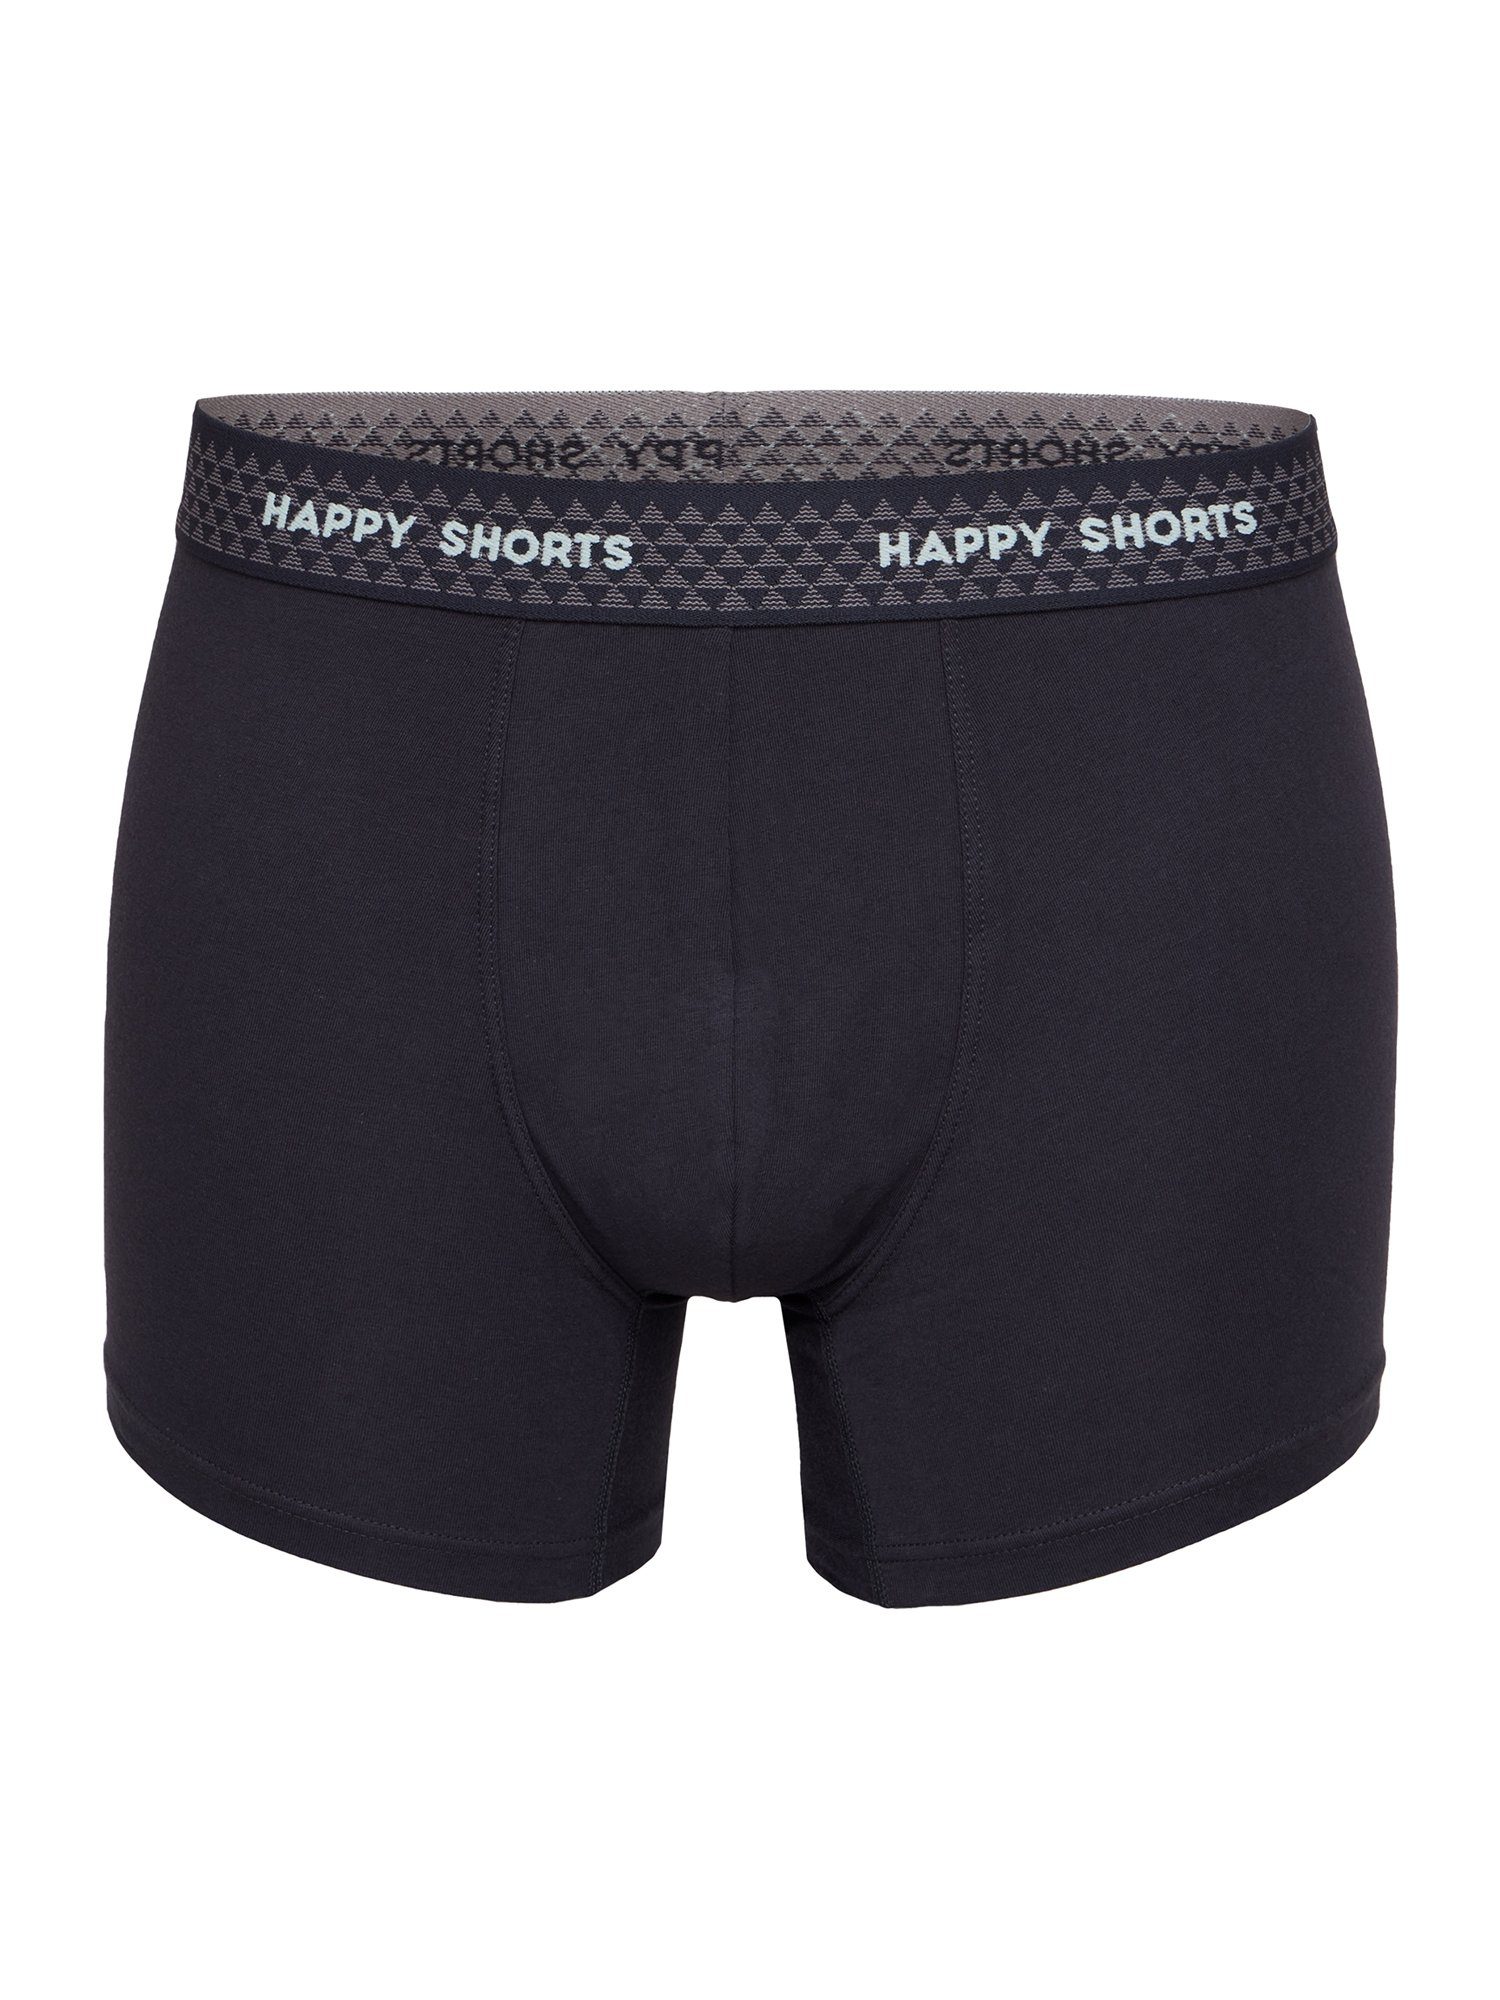 SHORTS Trunks (2-St) Retro HAPPY Mint Retro-shorts Triangles Pants Dusty unterhose Retro-Boxer